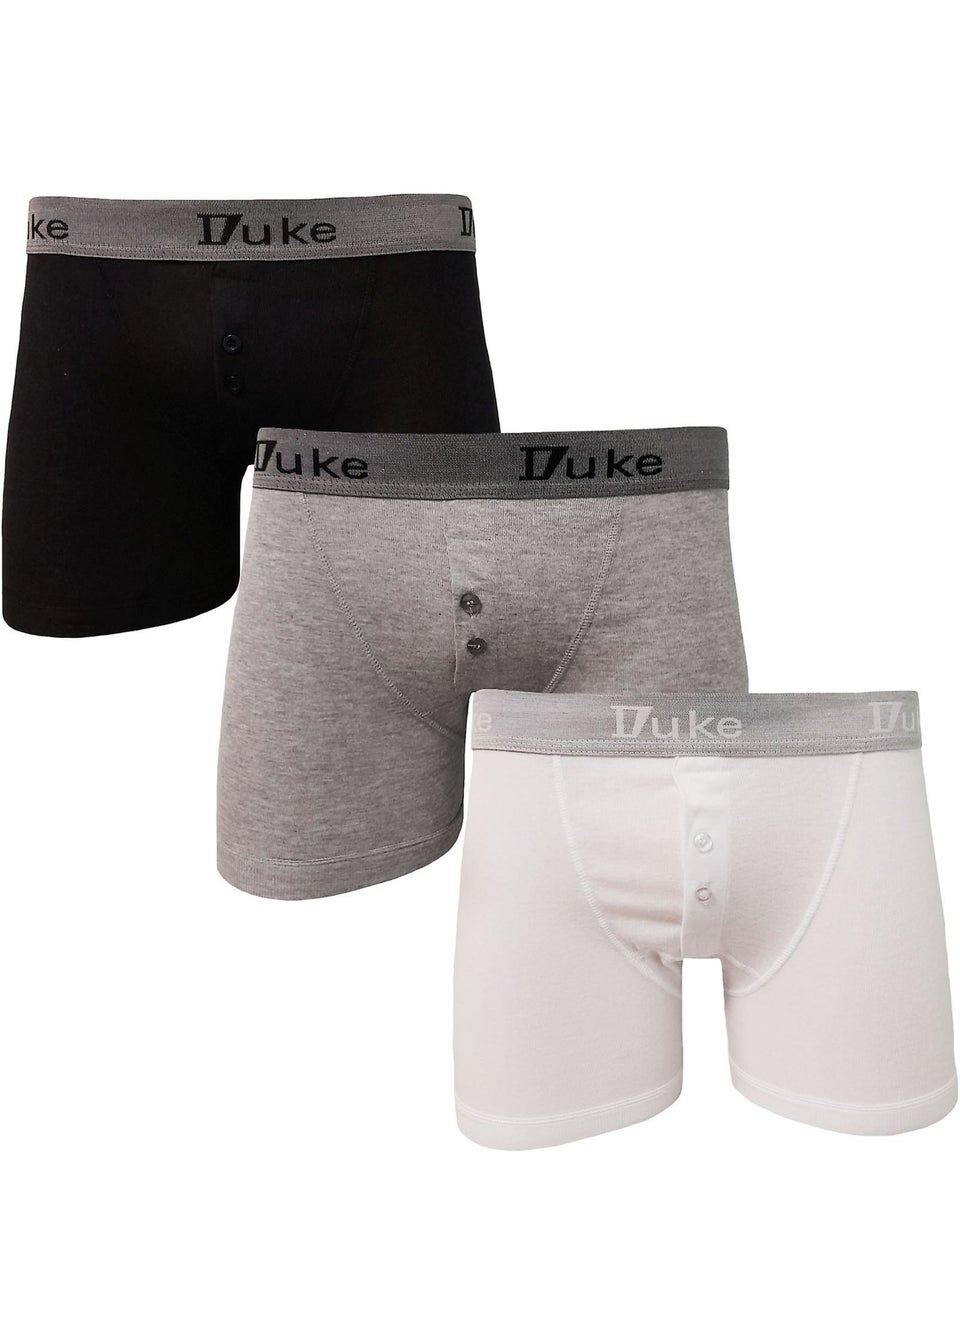 Duke Black/White London Driver Boxer Shorts (Pack of 3)